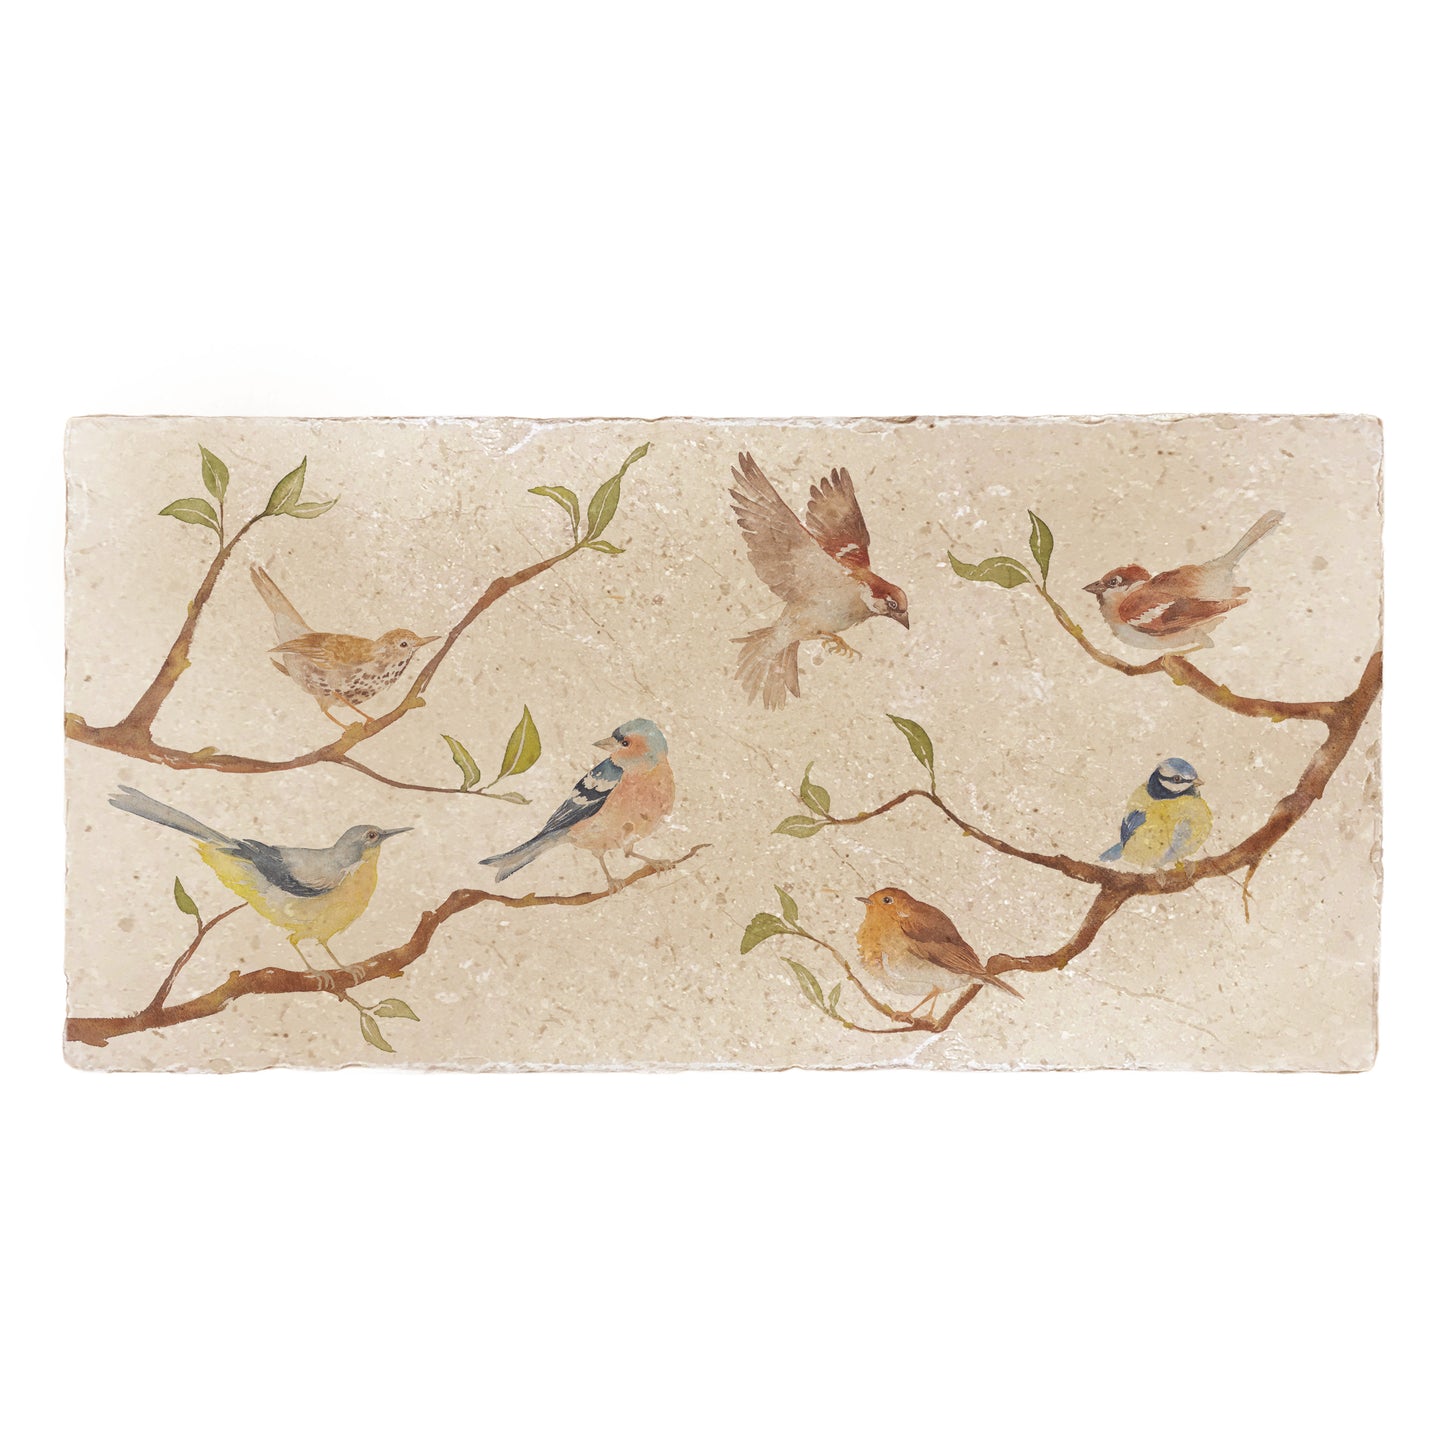 A handmade rectangle cream marble splashback tile featuring a watercolour countryside animal design of British garden birds on branches.